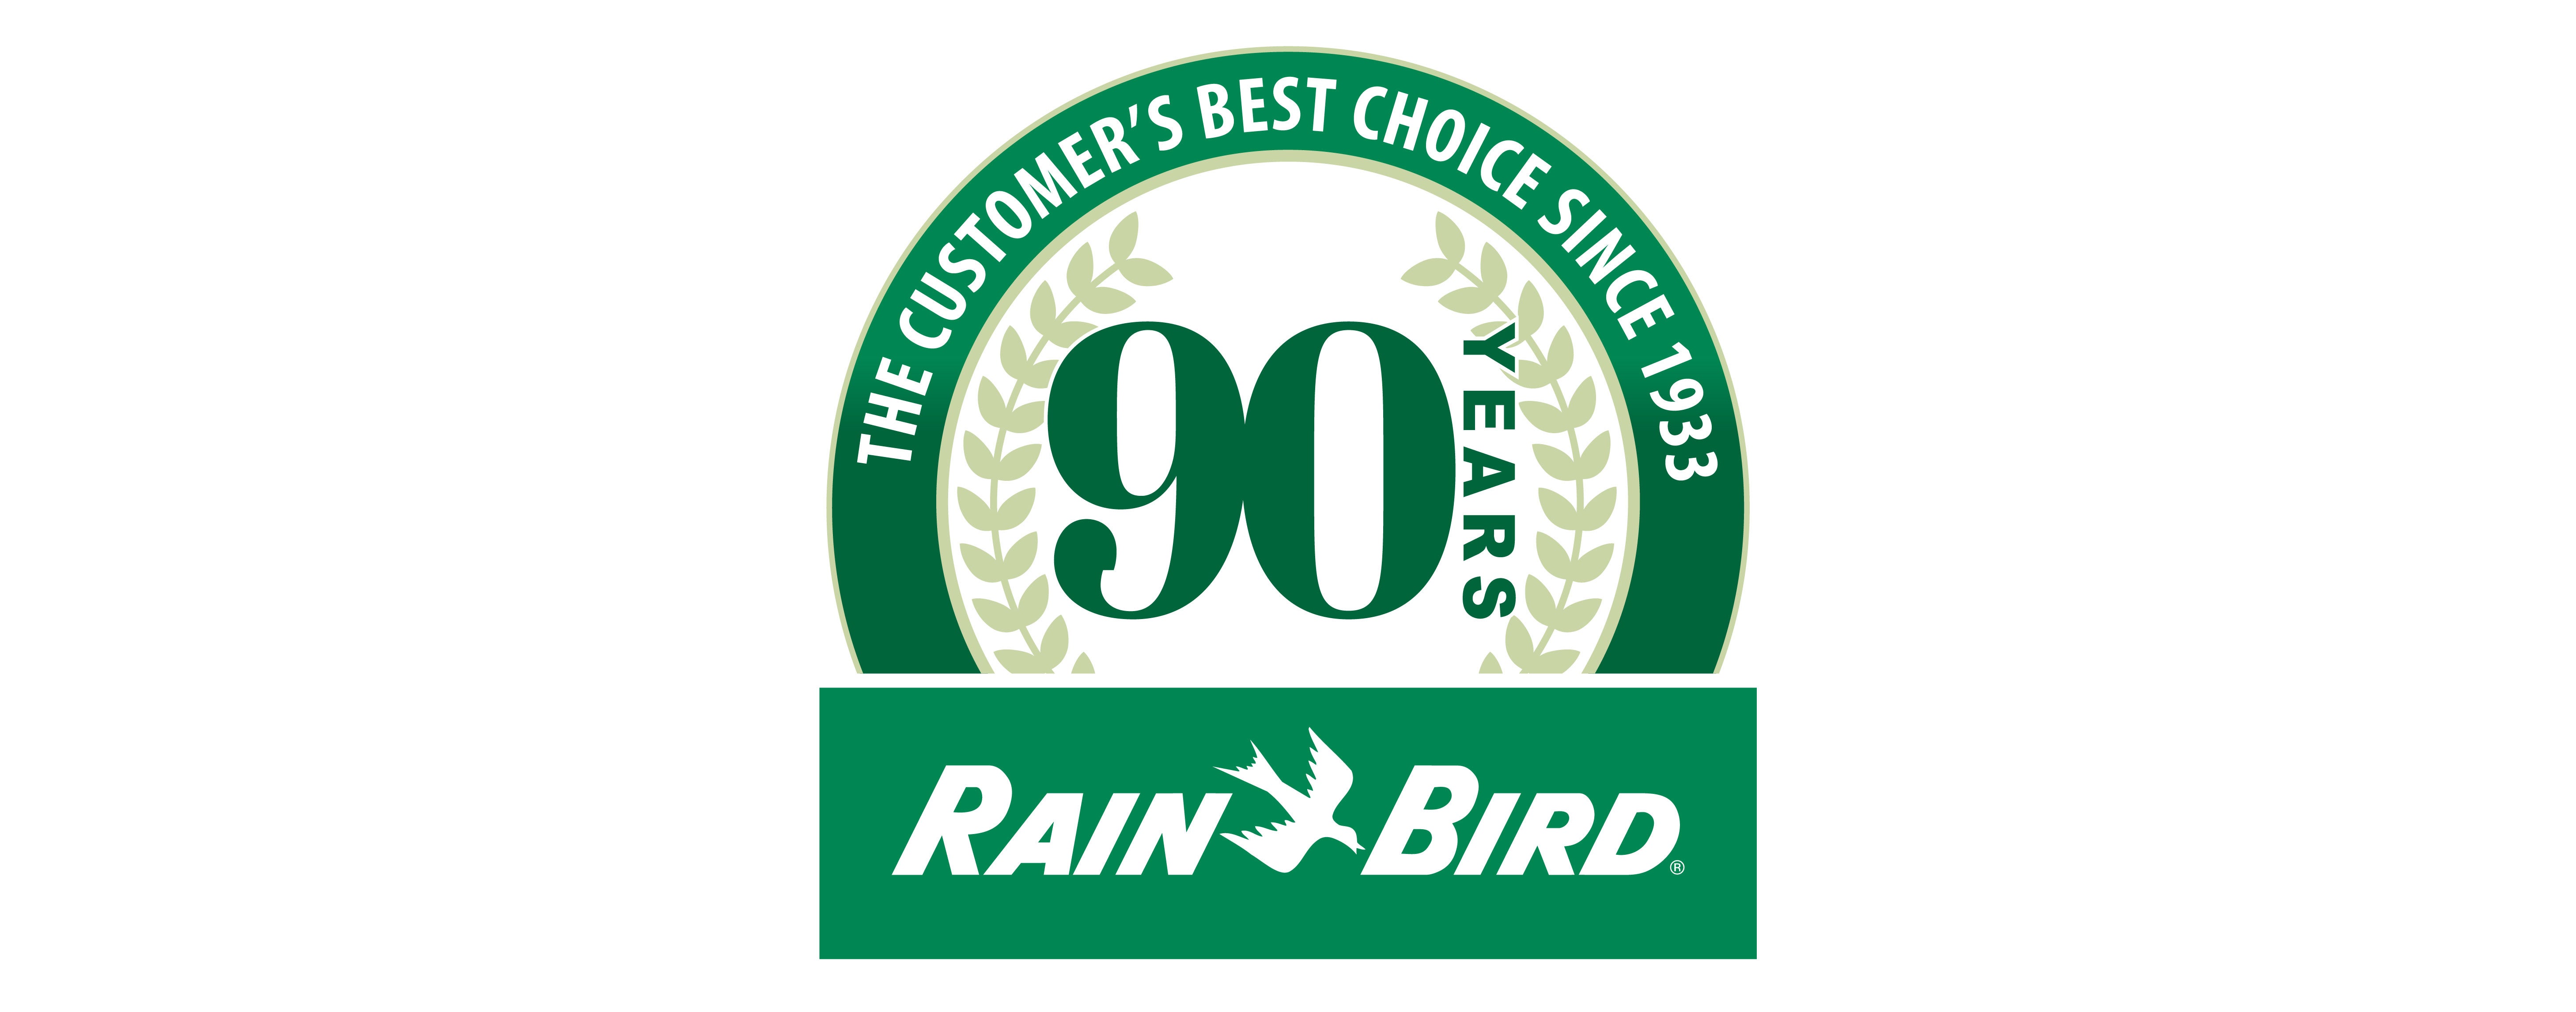 Rain Bird 90th Anniversary Logo Badge